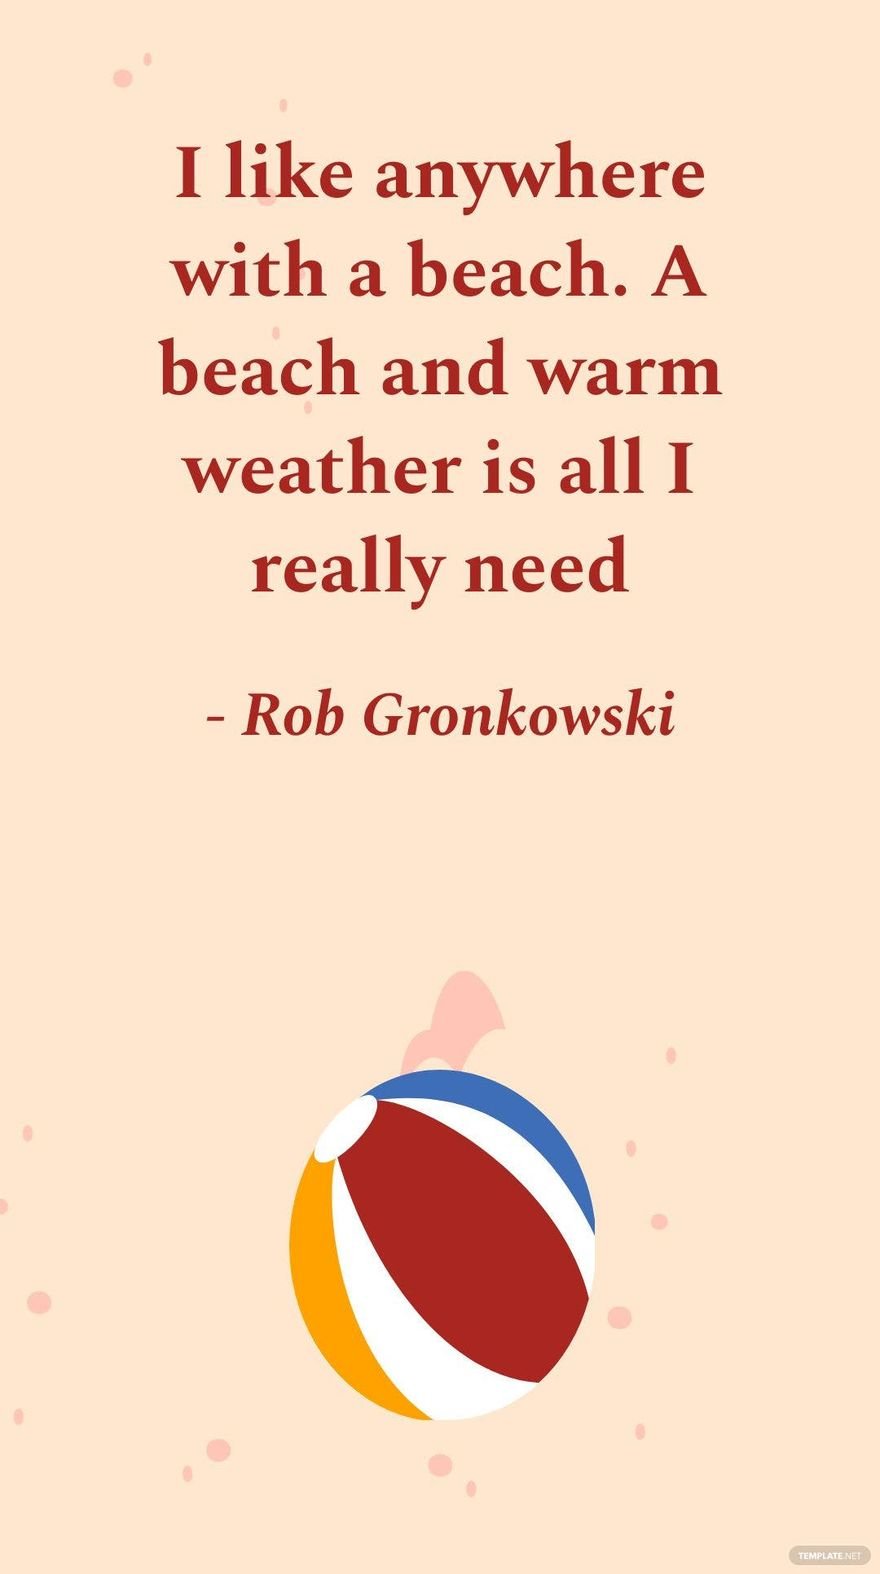 Rob Gronkowski - I like anywhere with a beach. A beach and warm weather is all I really need